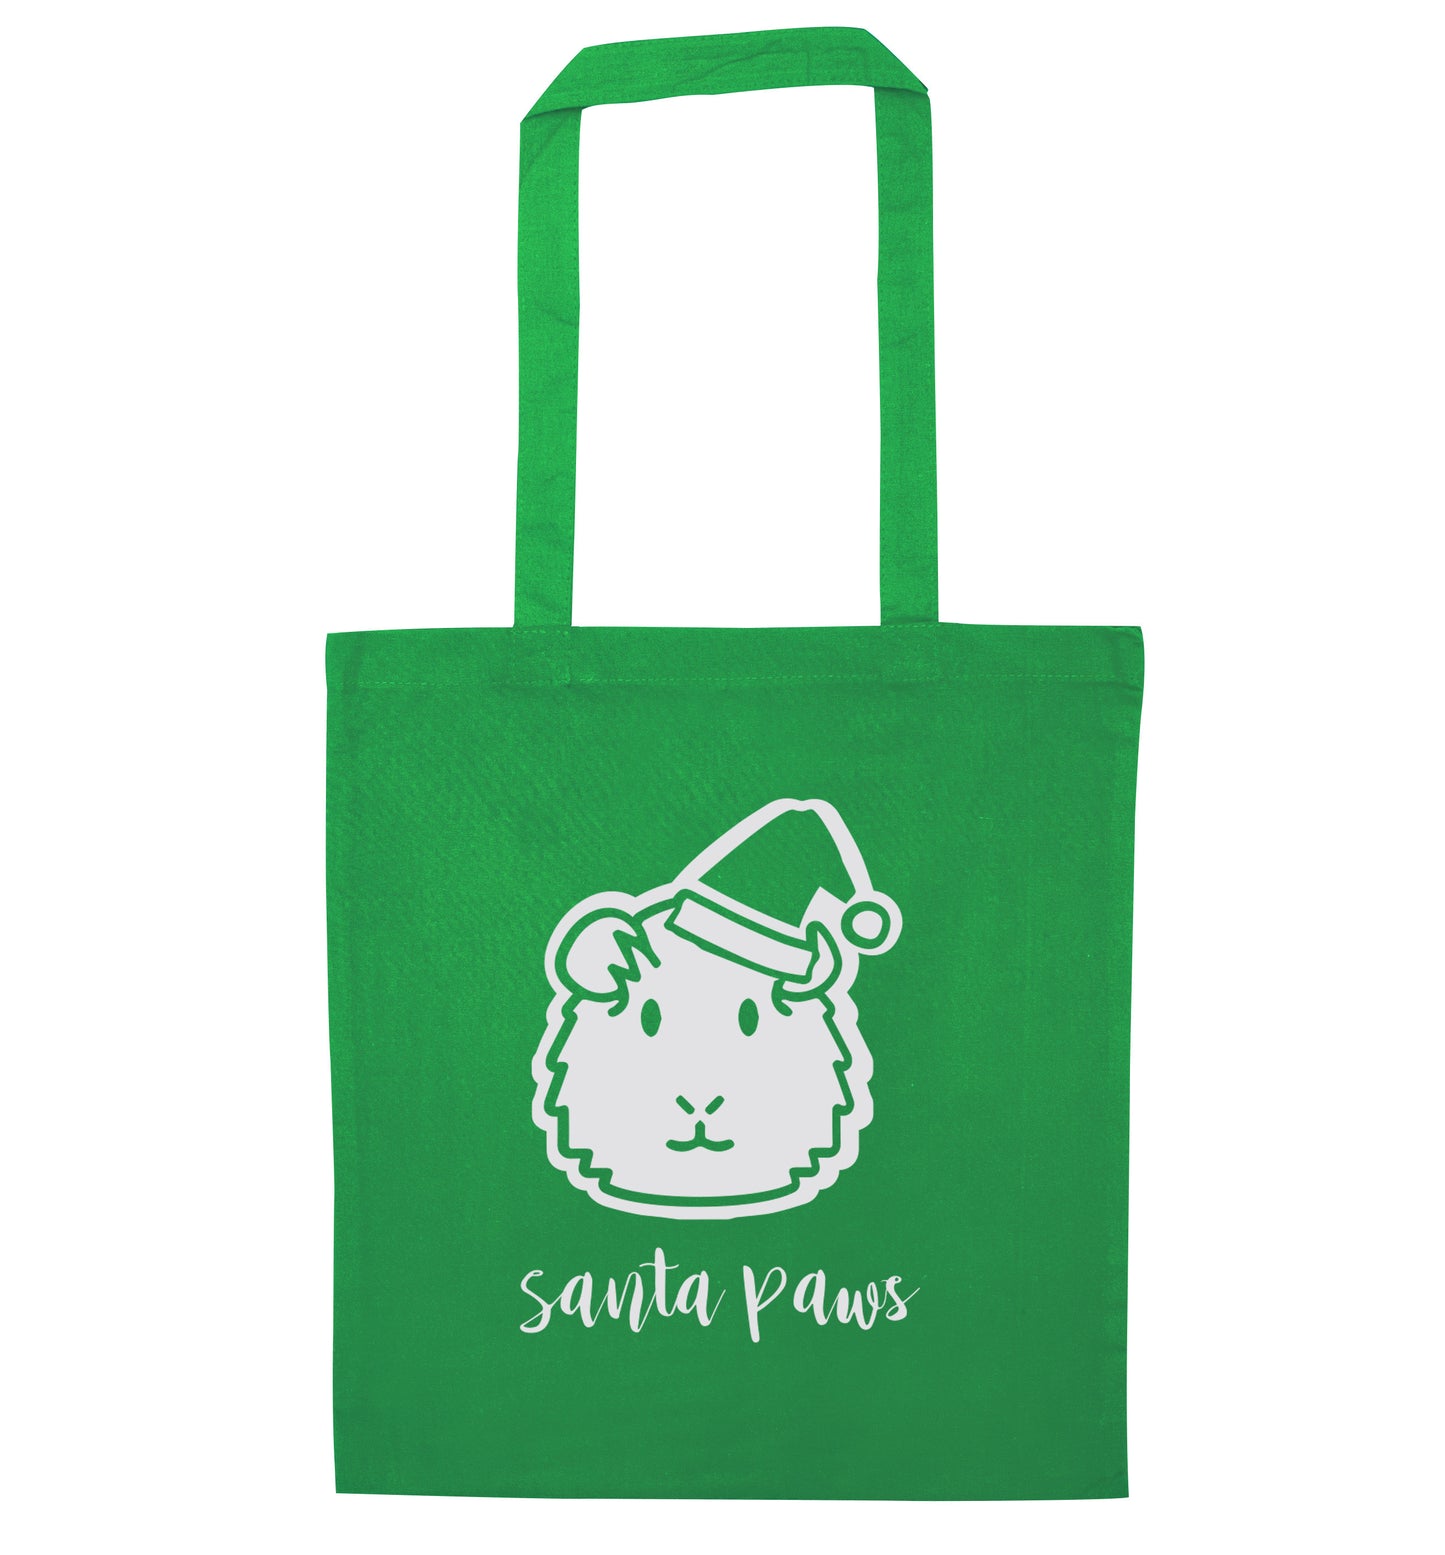 Guinea pig Santa Paws green tote bag